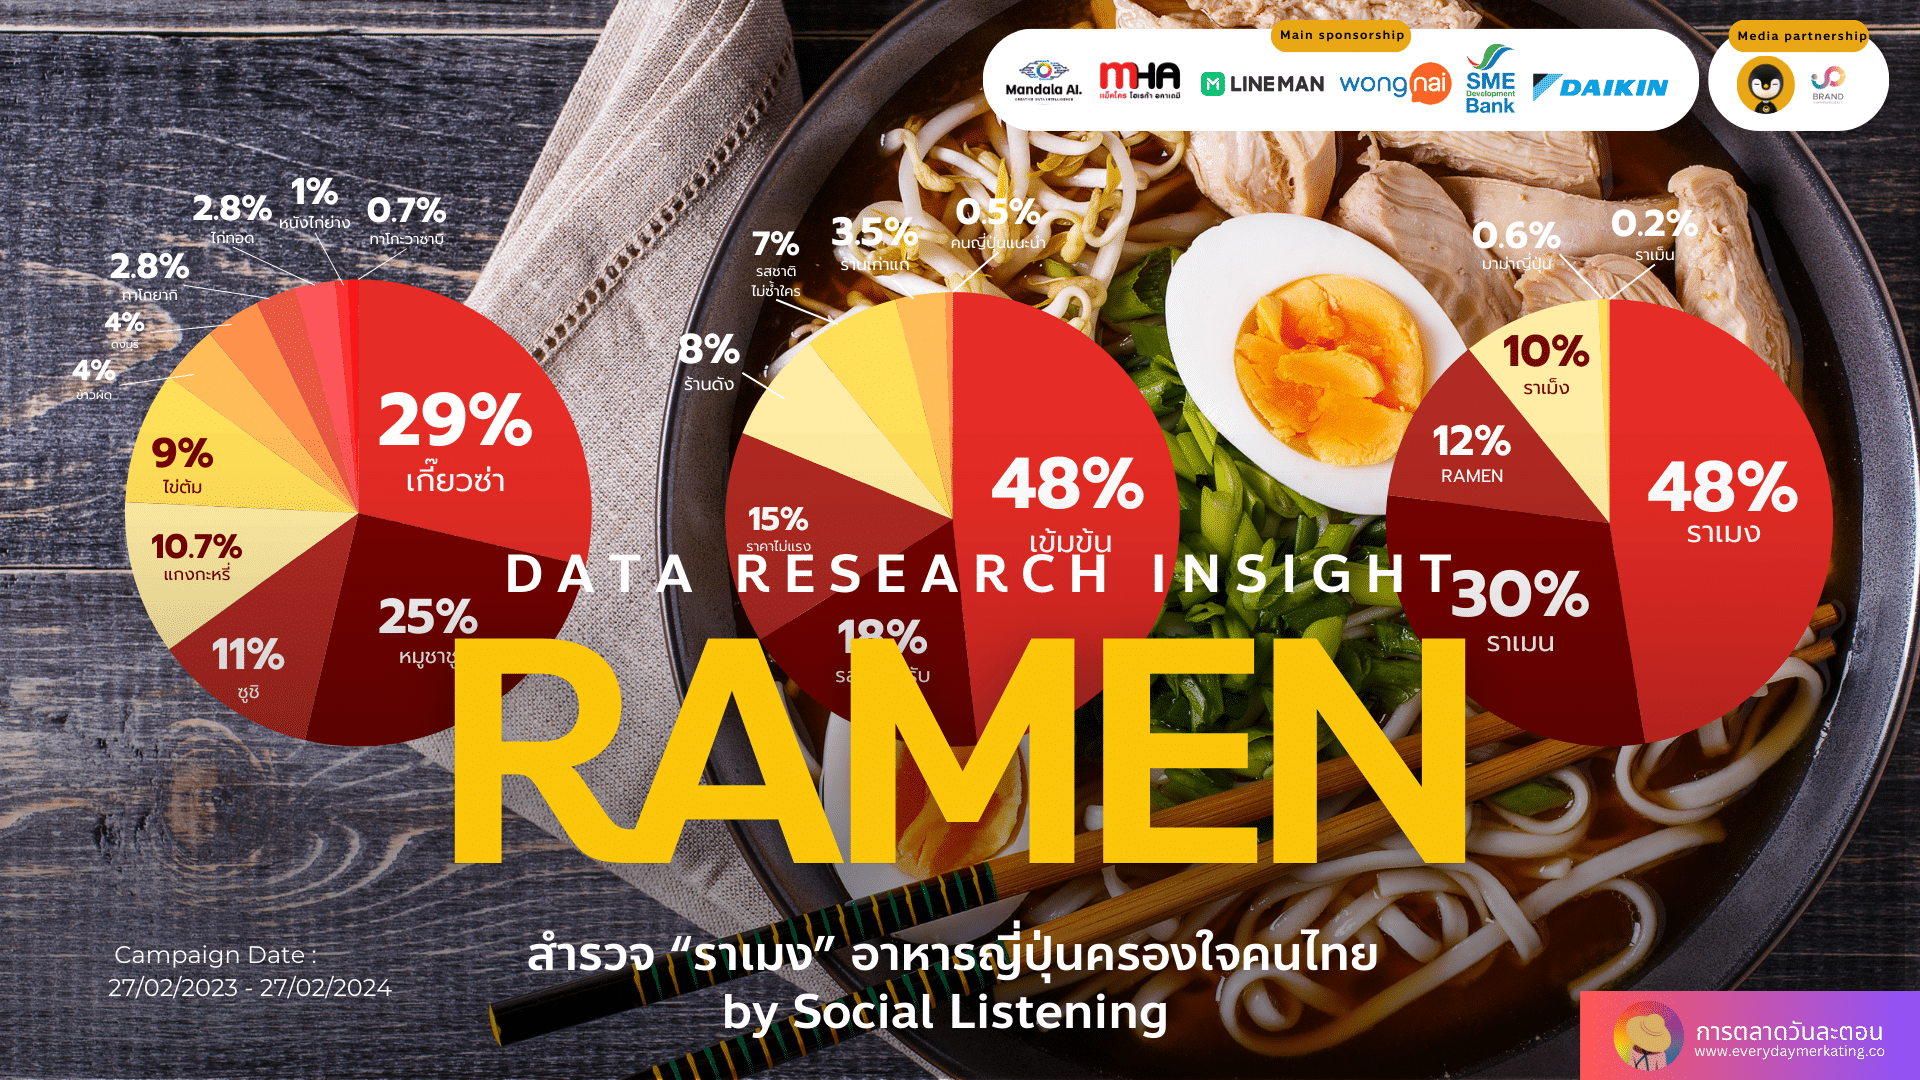 Data Research Insight ราเมง อาหารญี่ปุ่นขวัญใจคนไทย by Social Listening